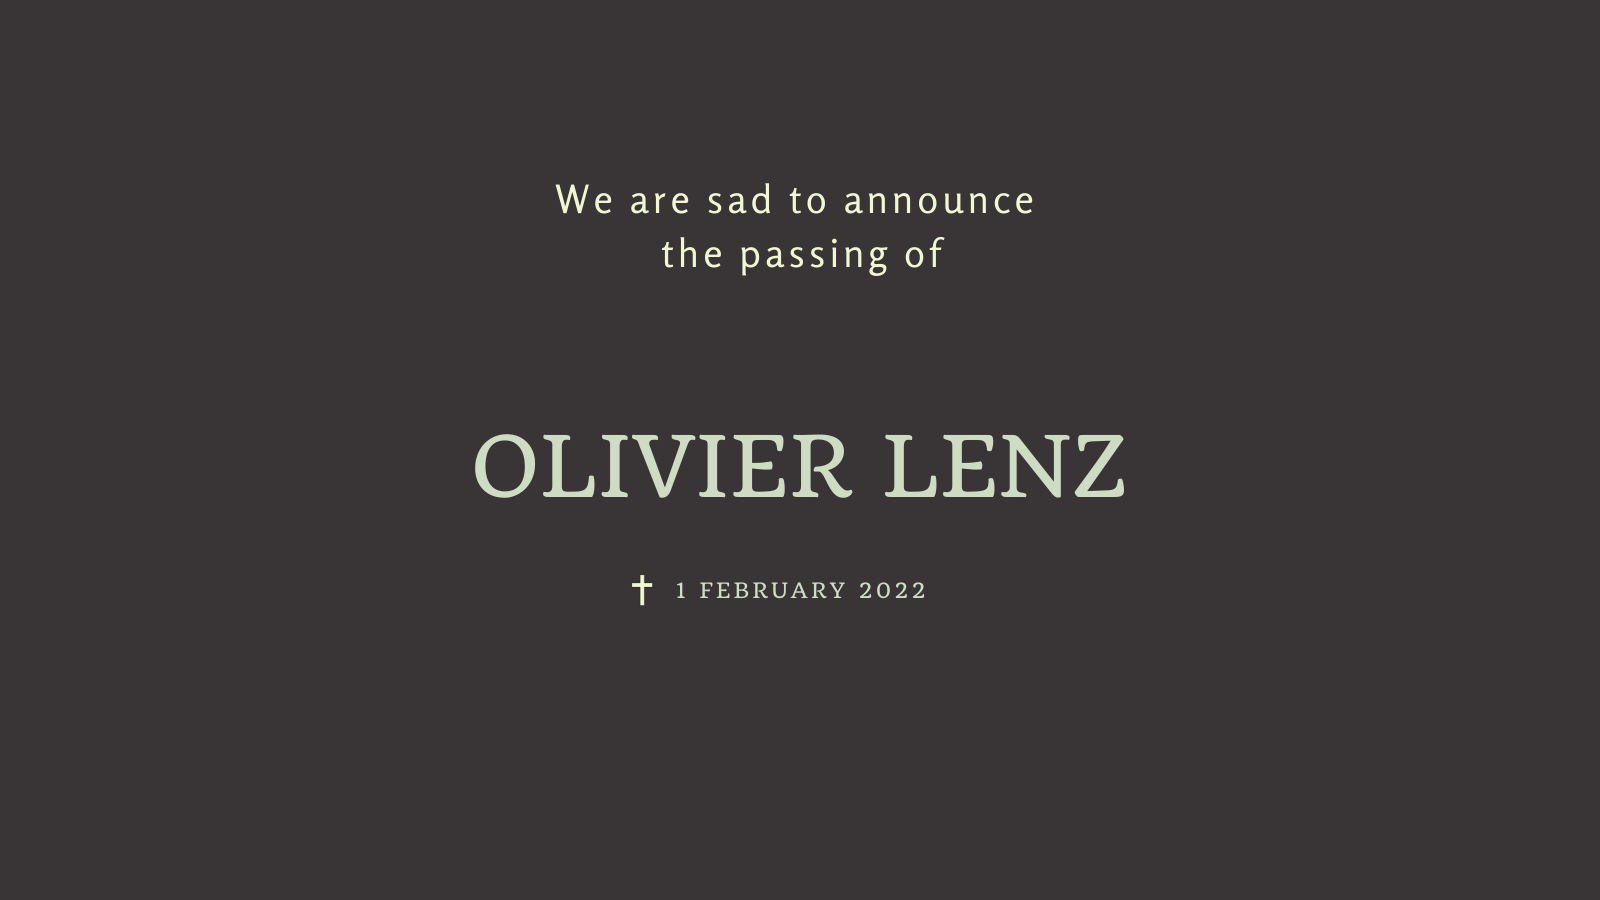 CCAM Partnership Board Delegate, Olivier Lenz has passed away